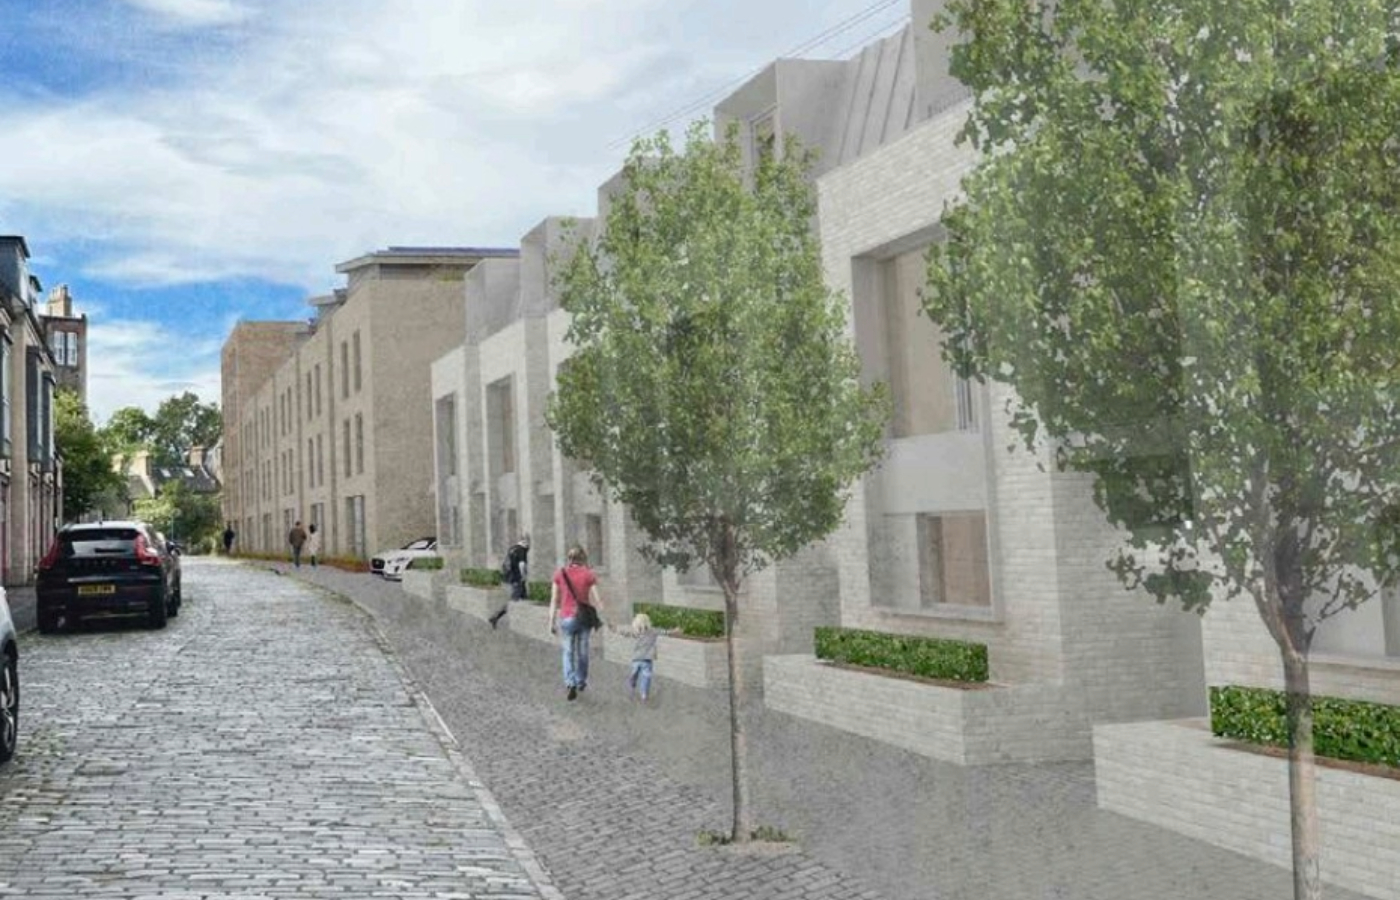 Townhouse plans for Edinburgh student flats.